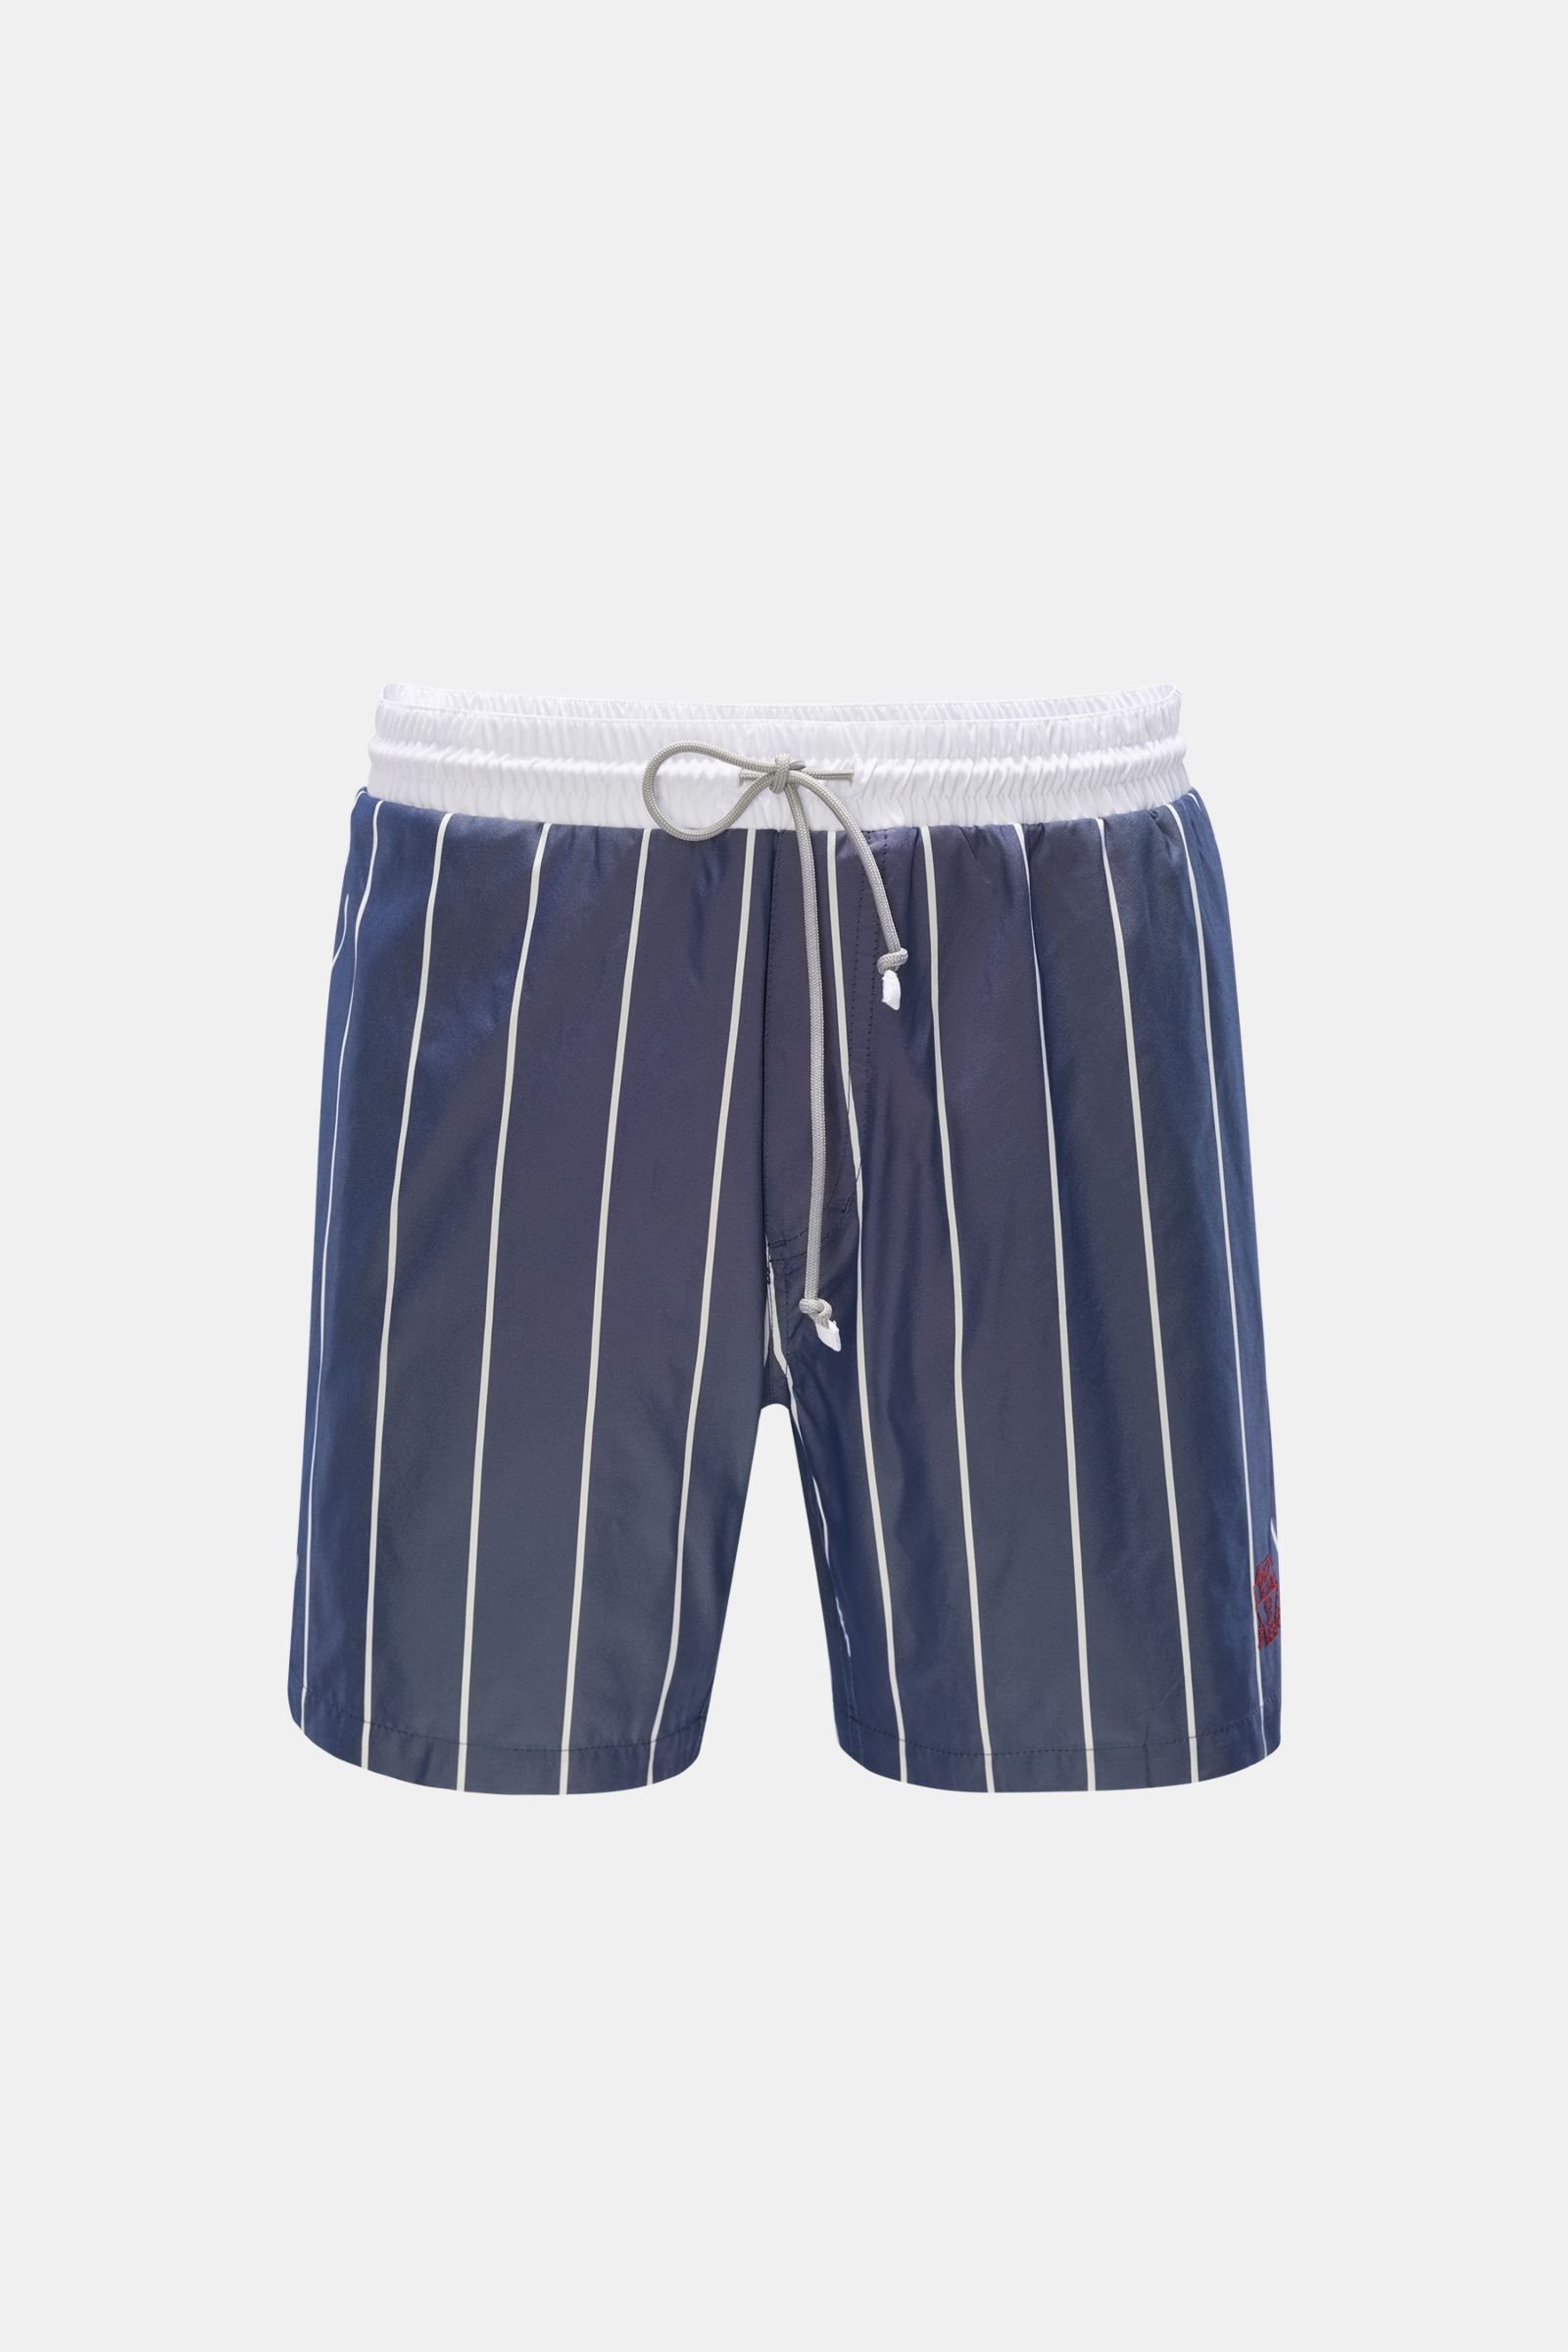 Swim shorts grey-blue striped